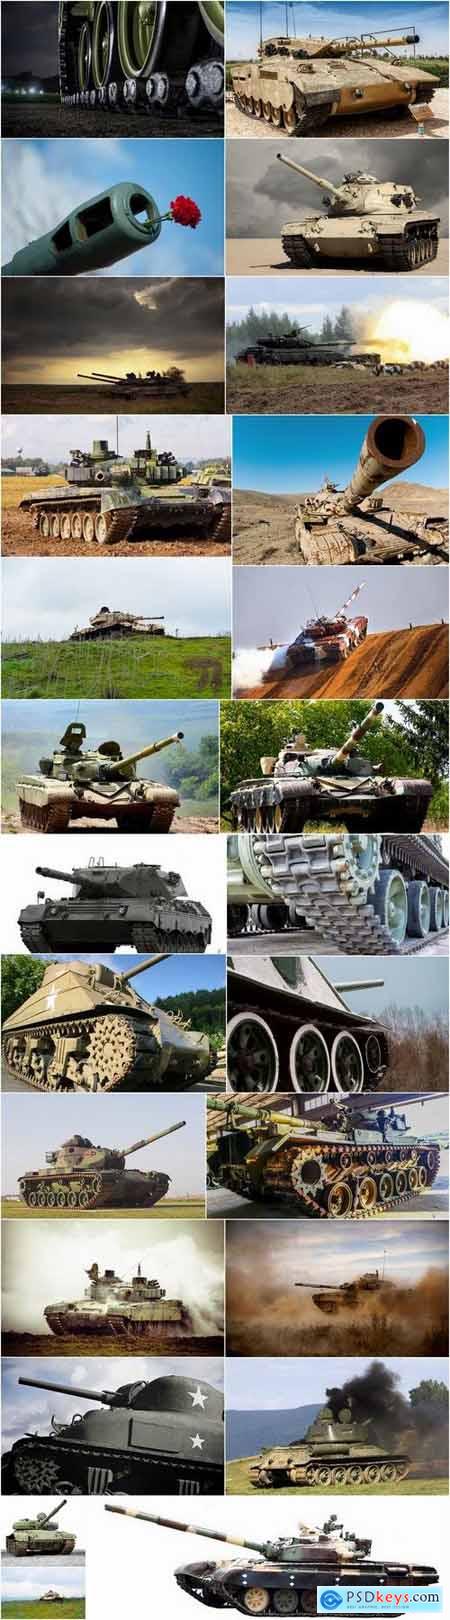 Tank armor cannon caterpillar drive 25 HQ Jpeg